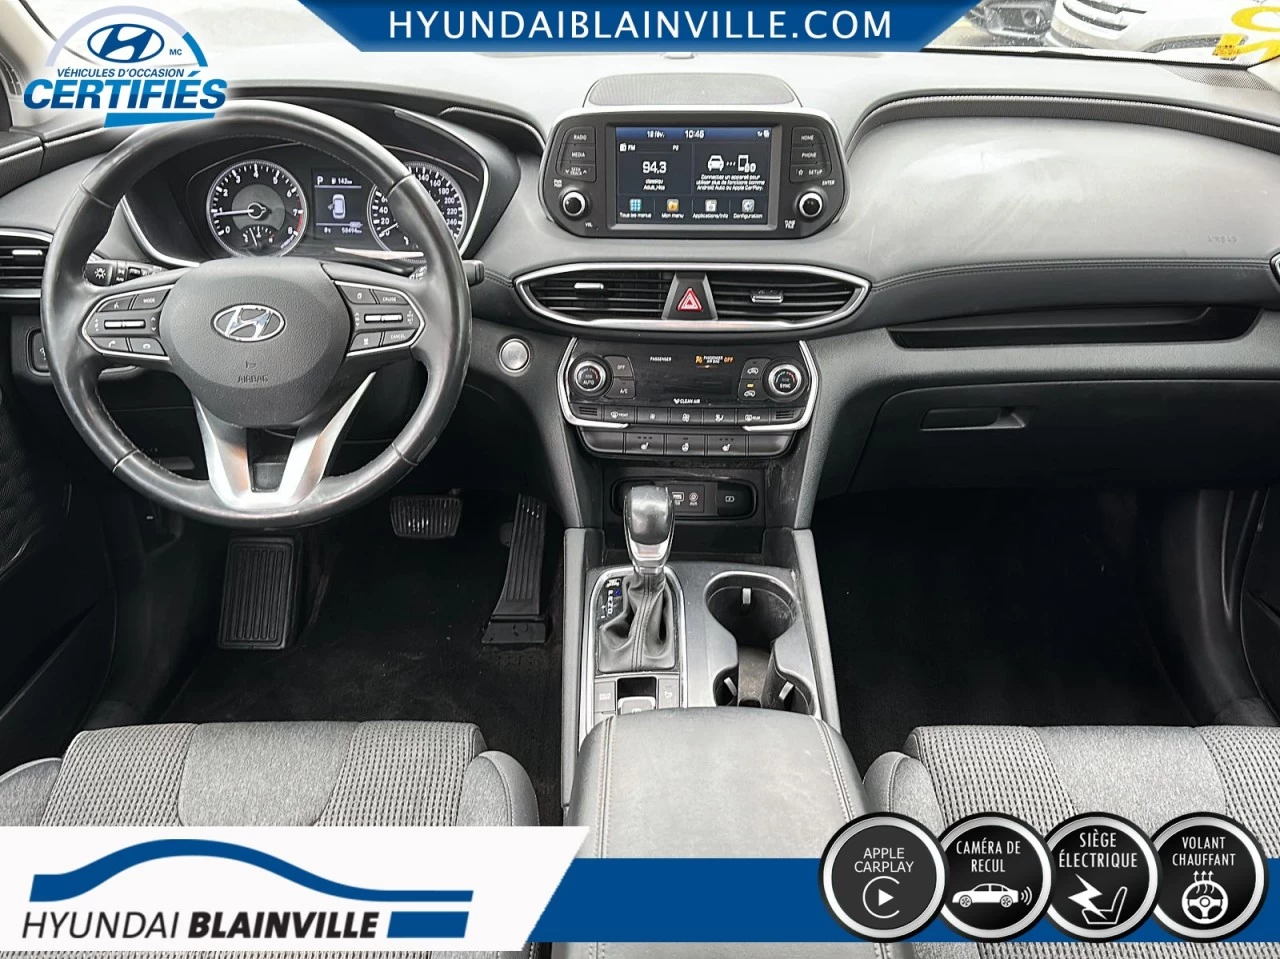 2019 Hyundai Santa Fe AWD, PREFERRED, 2.4L, SIEGES ET VOLANT CHAUFFANTS+ Image principale